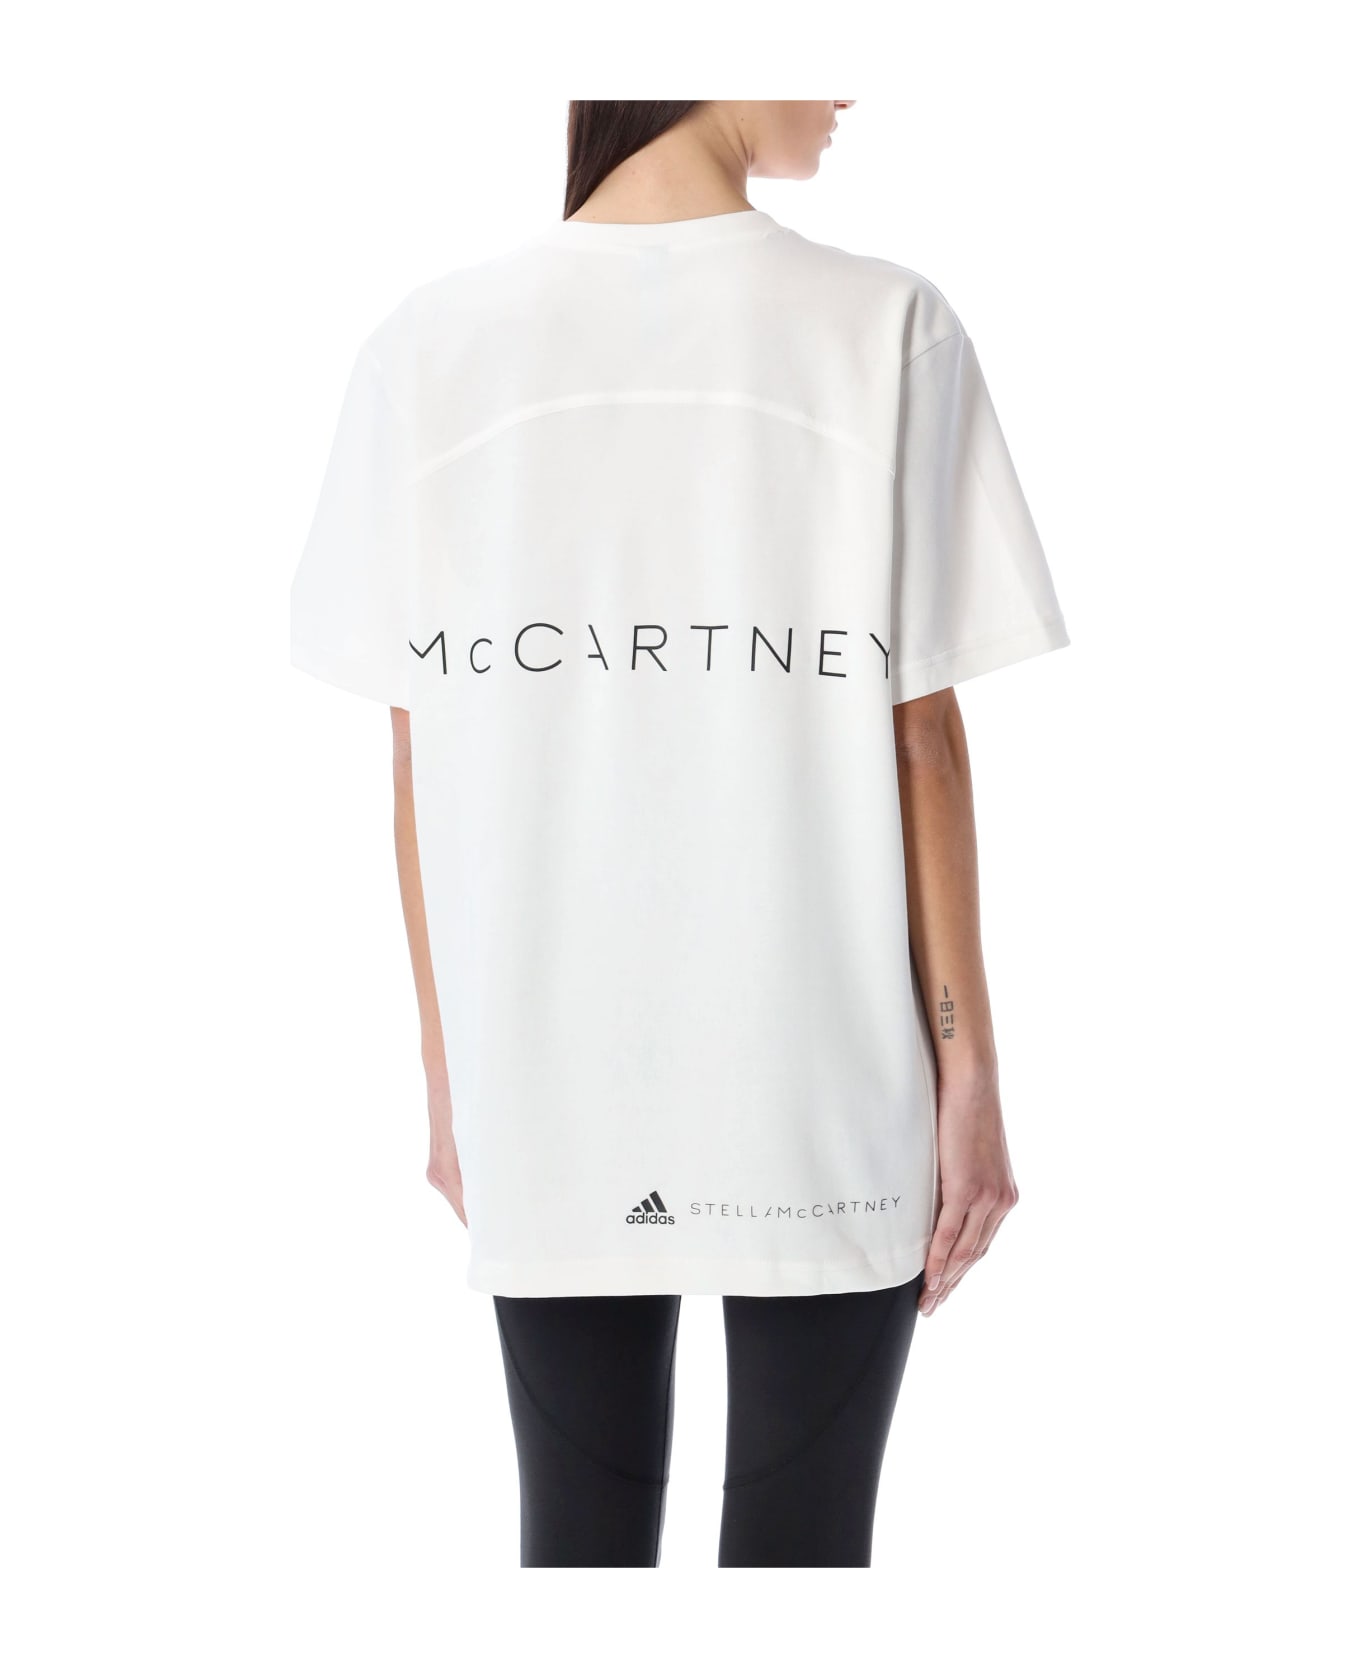 Adidas by Stella McCartney Logo T-shirt - Bianco